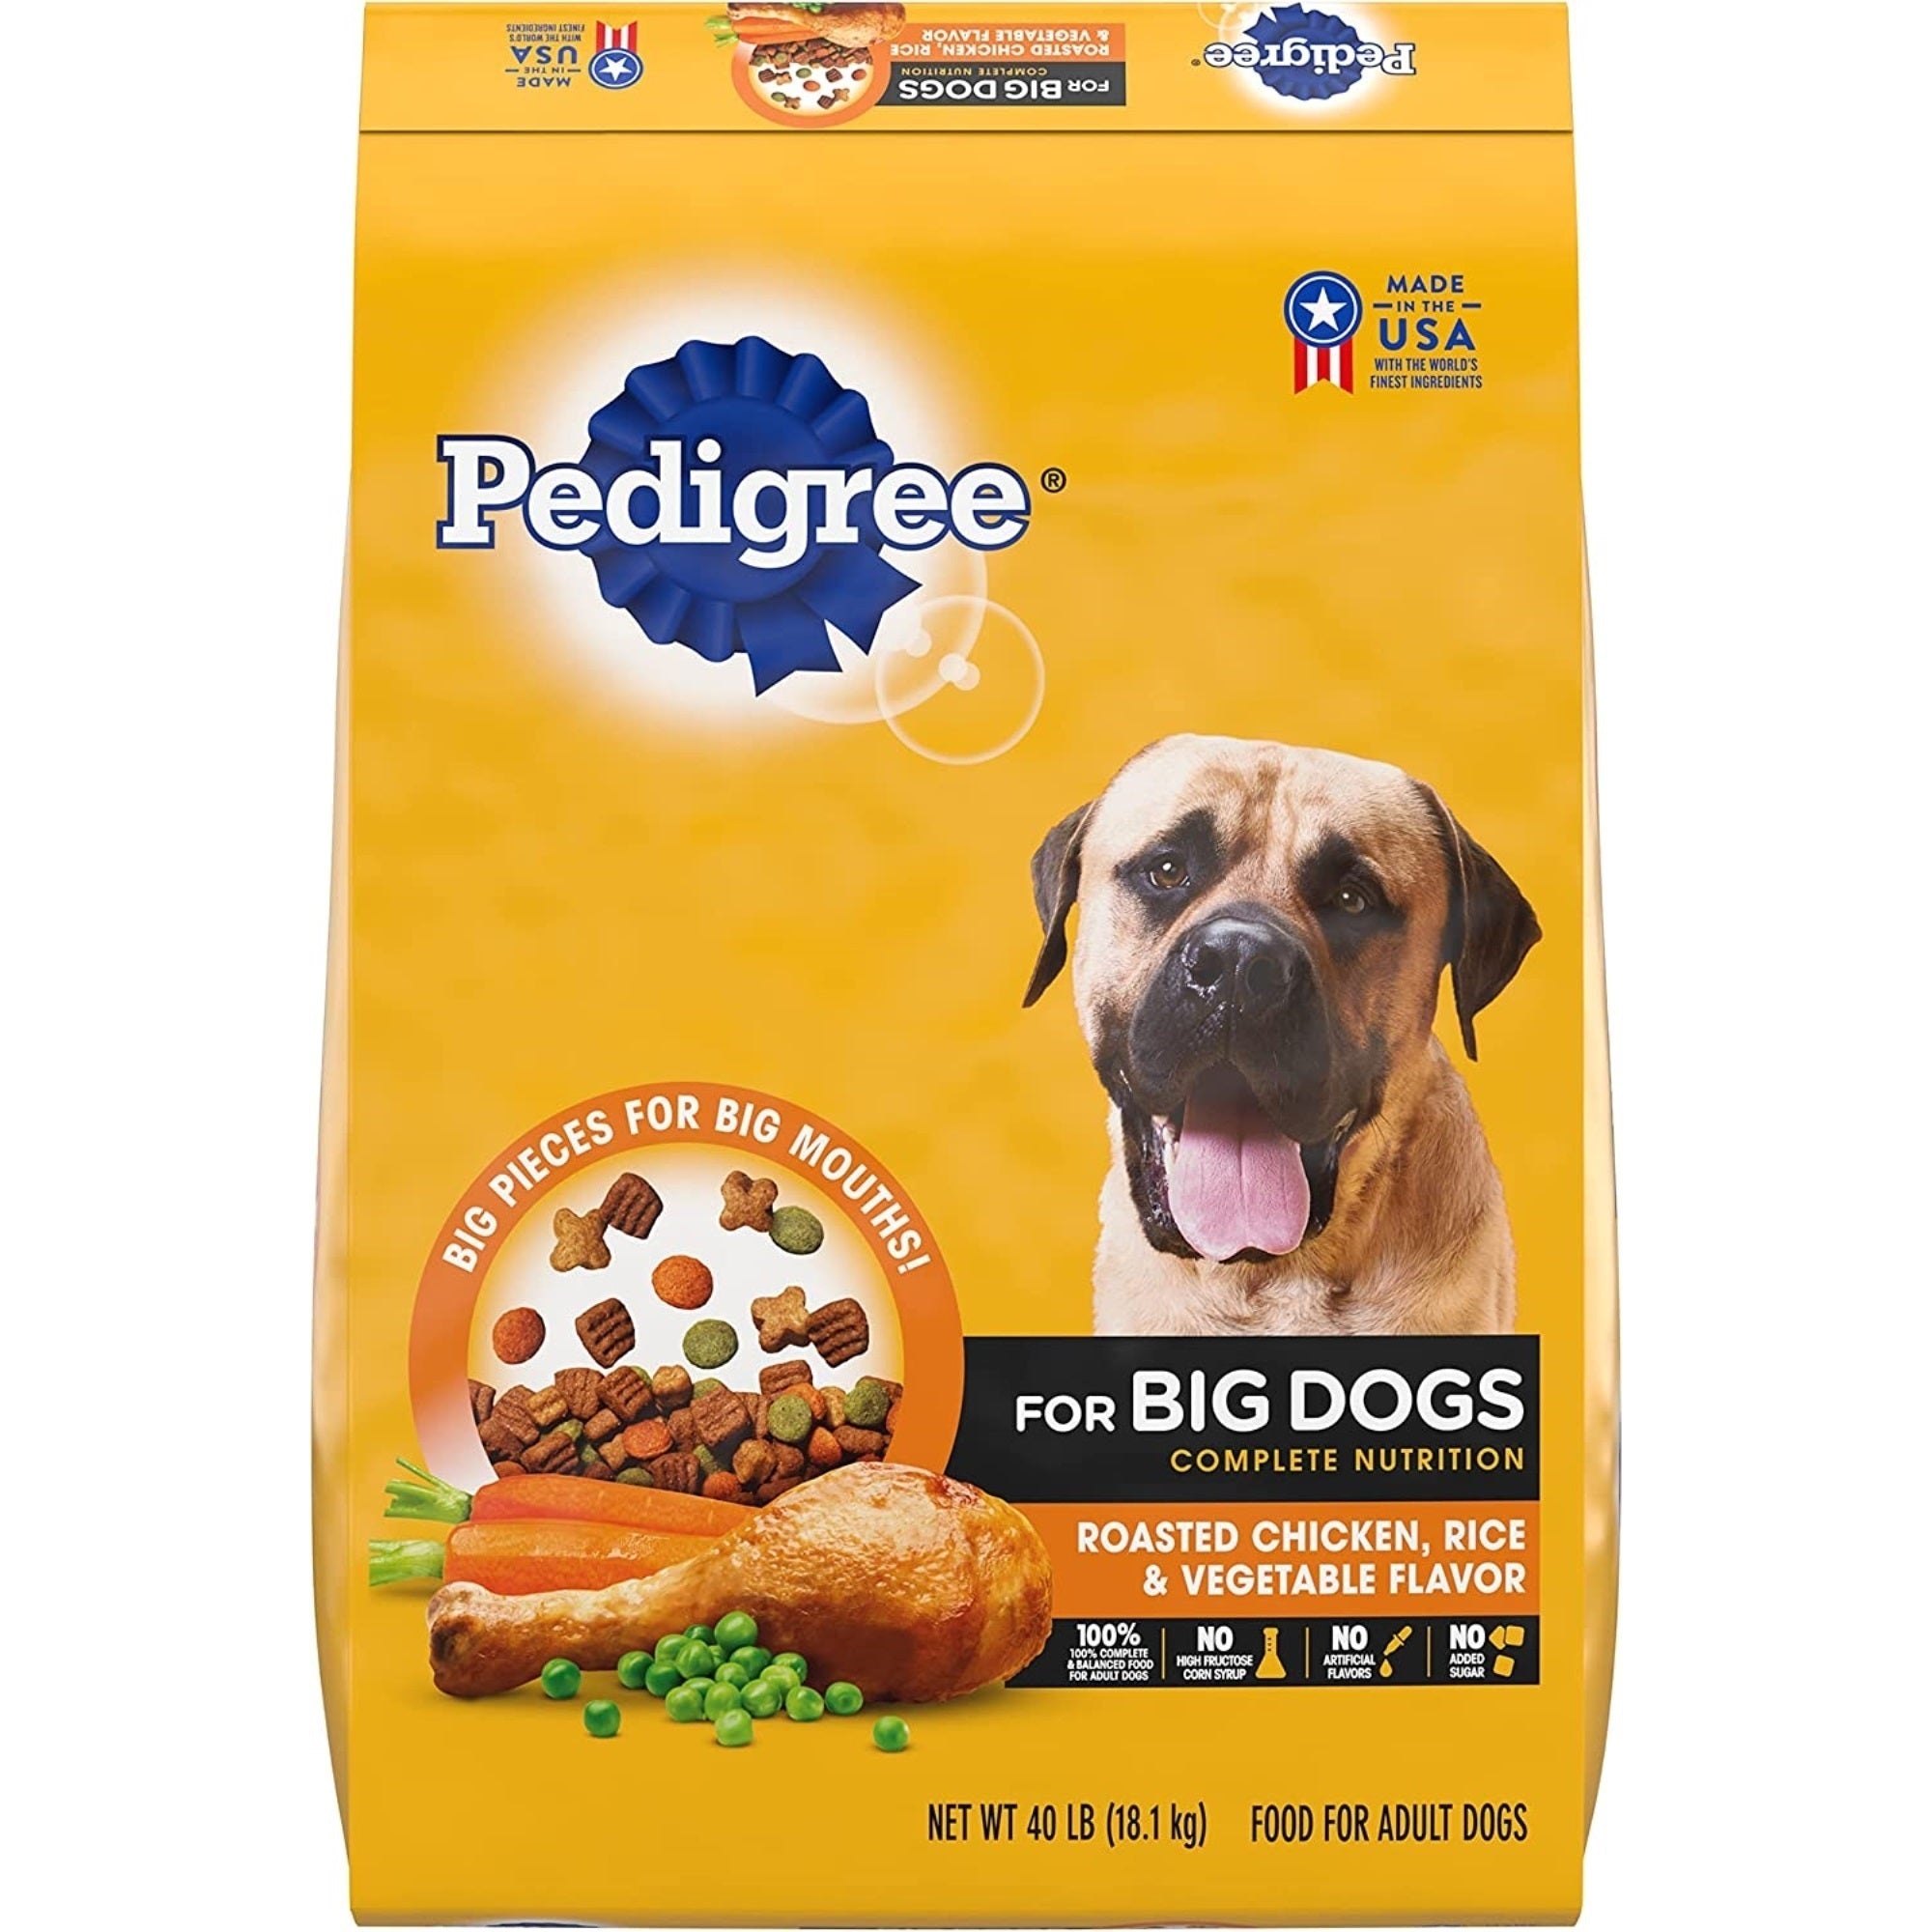 Pedigree Roasted Chicken, Rice & Vegetable Flavor Big Dogs Adult Complete Nutrition Dry Dog Food, 40 LB